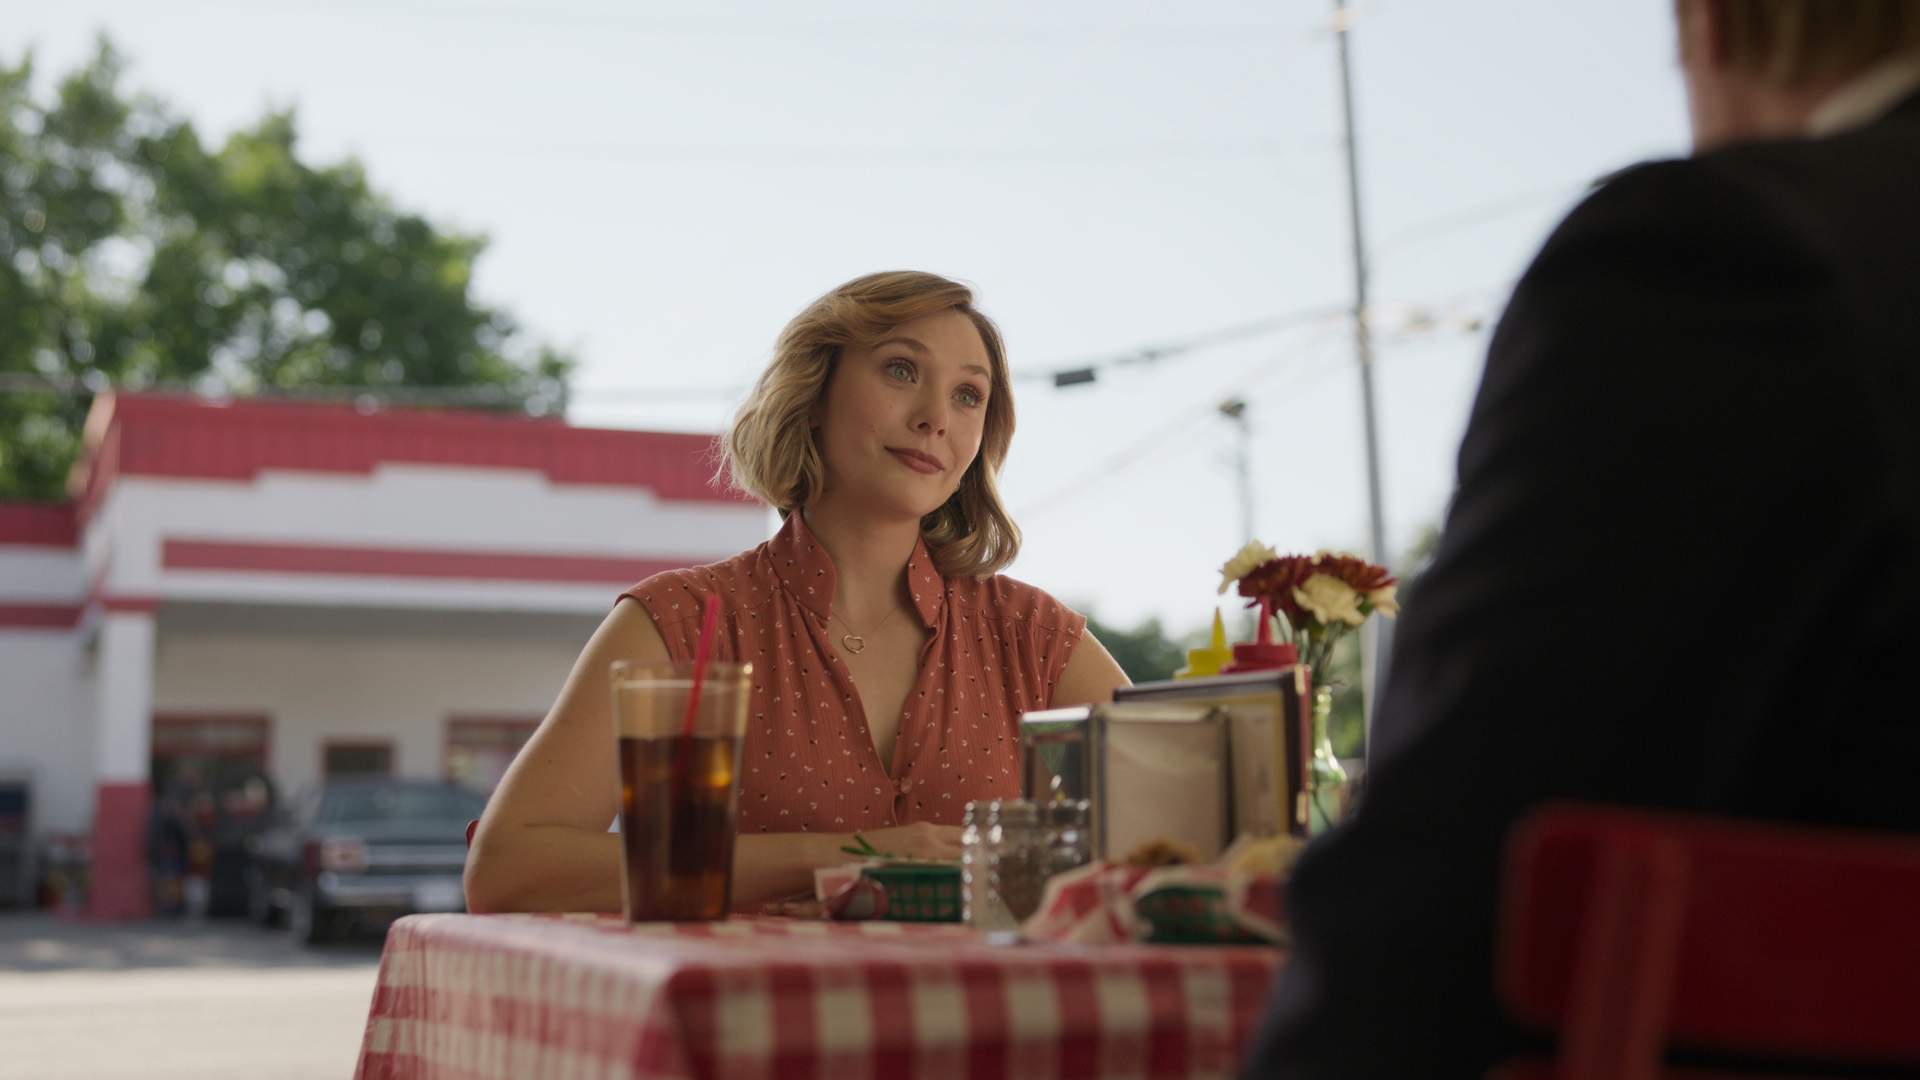 The Trailer for HBO's New True-Crime Series 'Love & Death' Plunges Elizabeth Olsen Into a Killer Affair